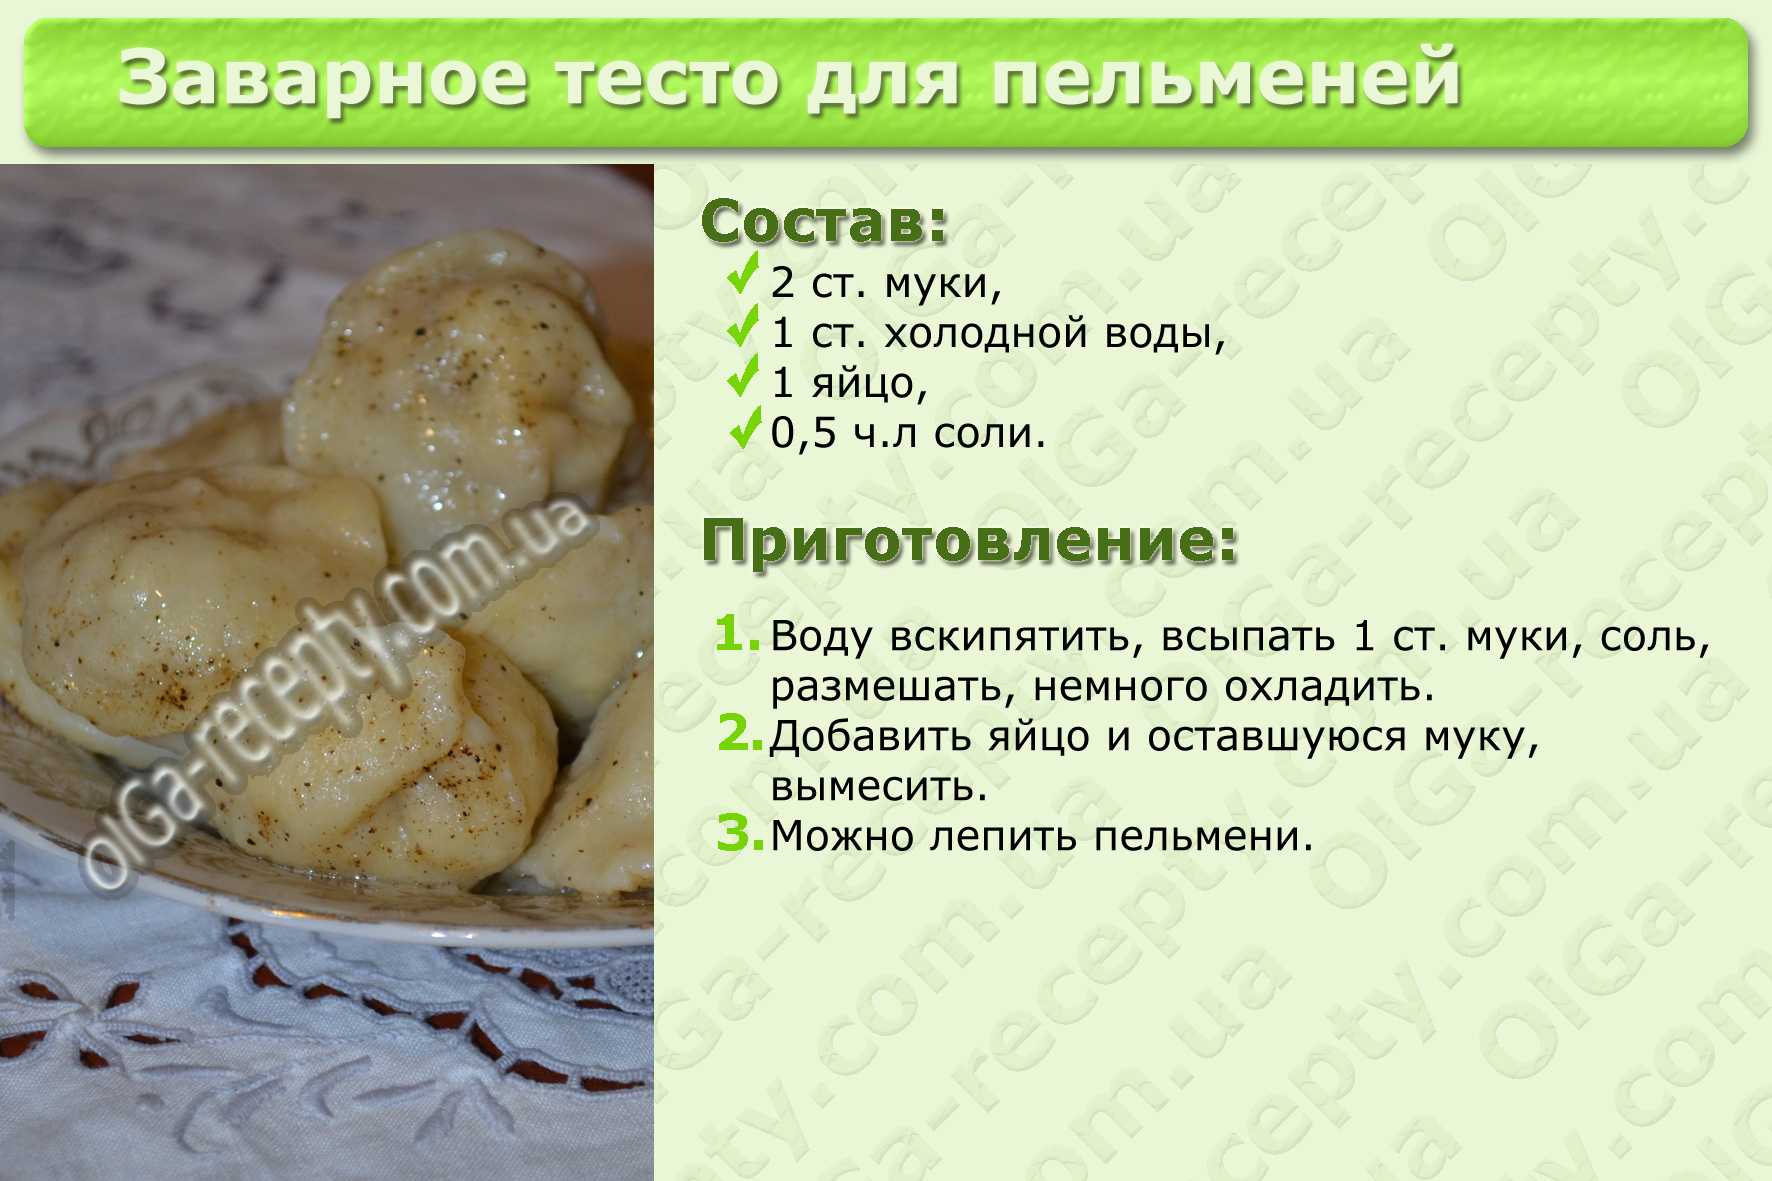 пельменное тесто рецепт на кипятке и раст масле с фото пошагово (120) фото